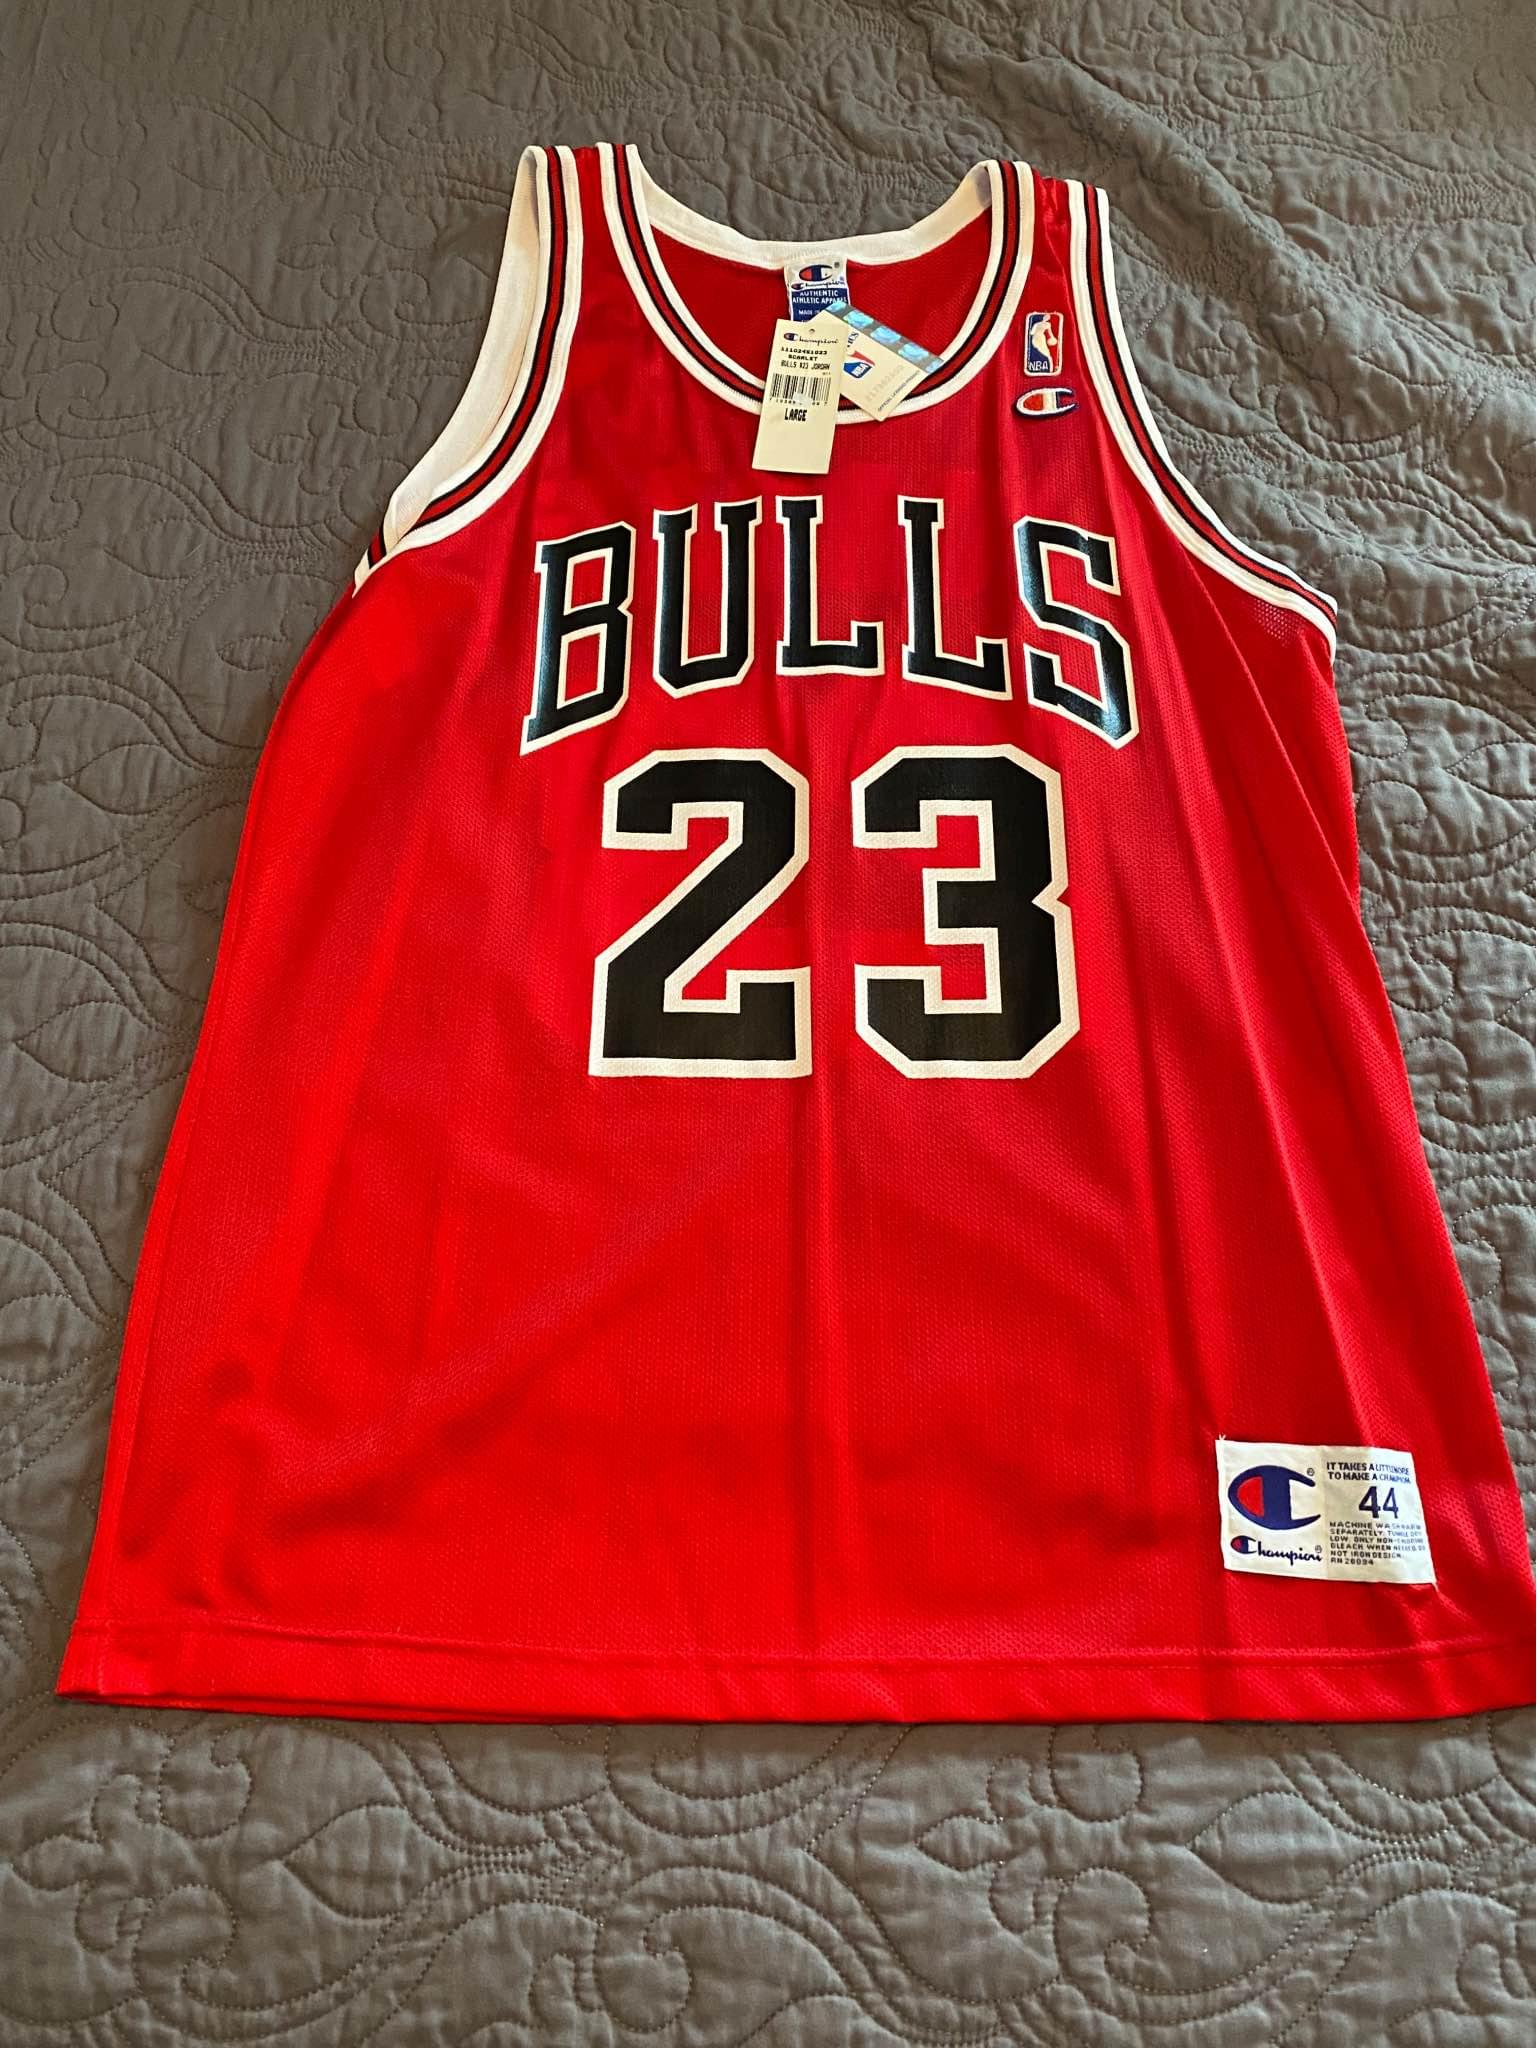 90s bulls jersey